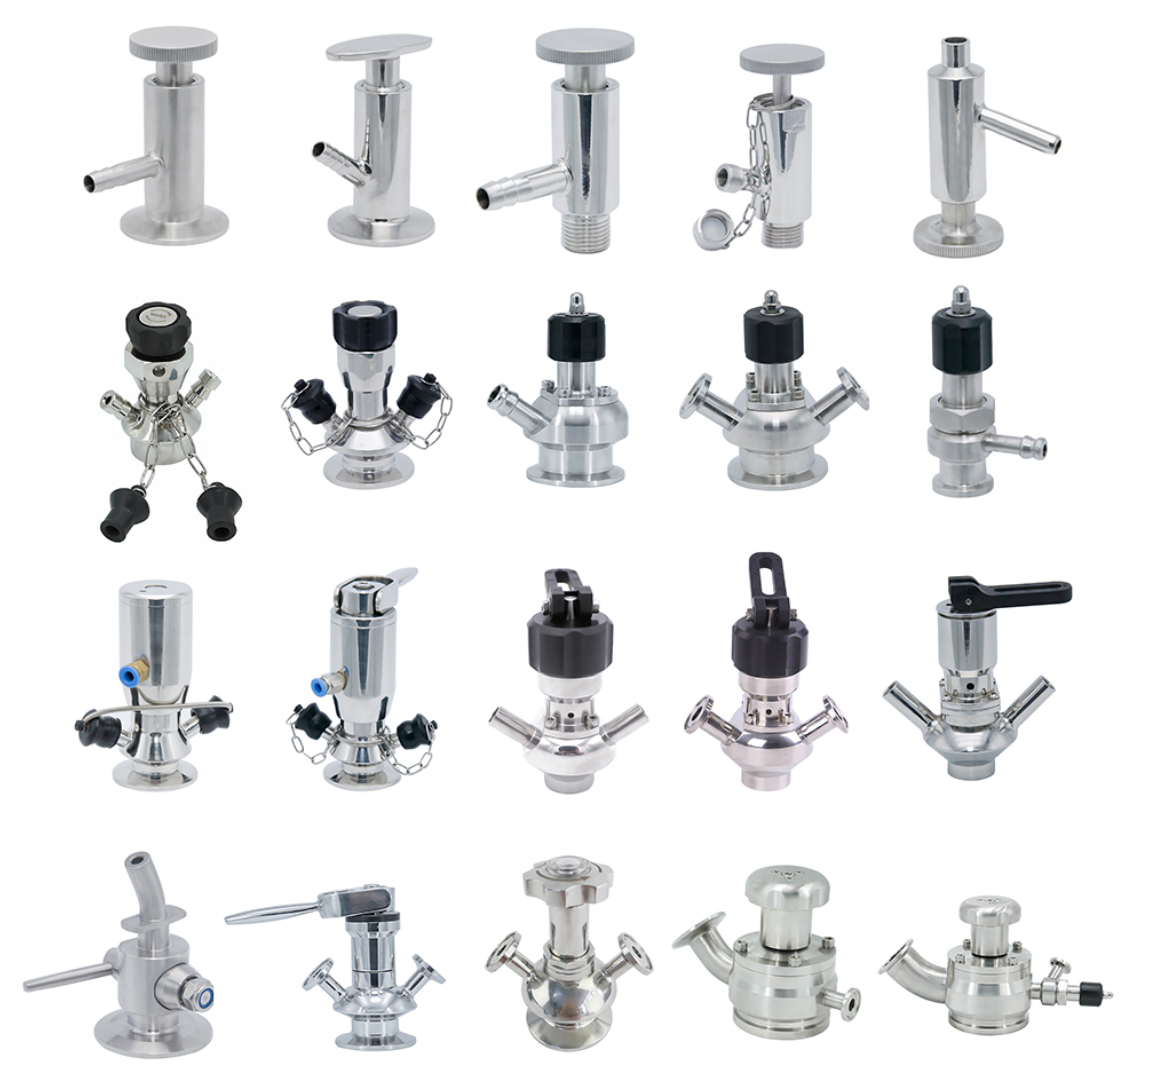 Different types of sampling valve